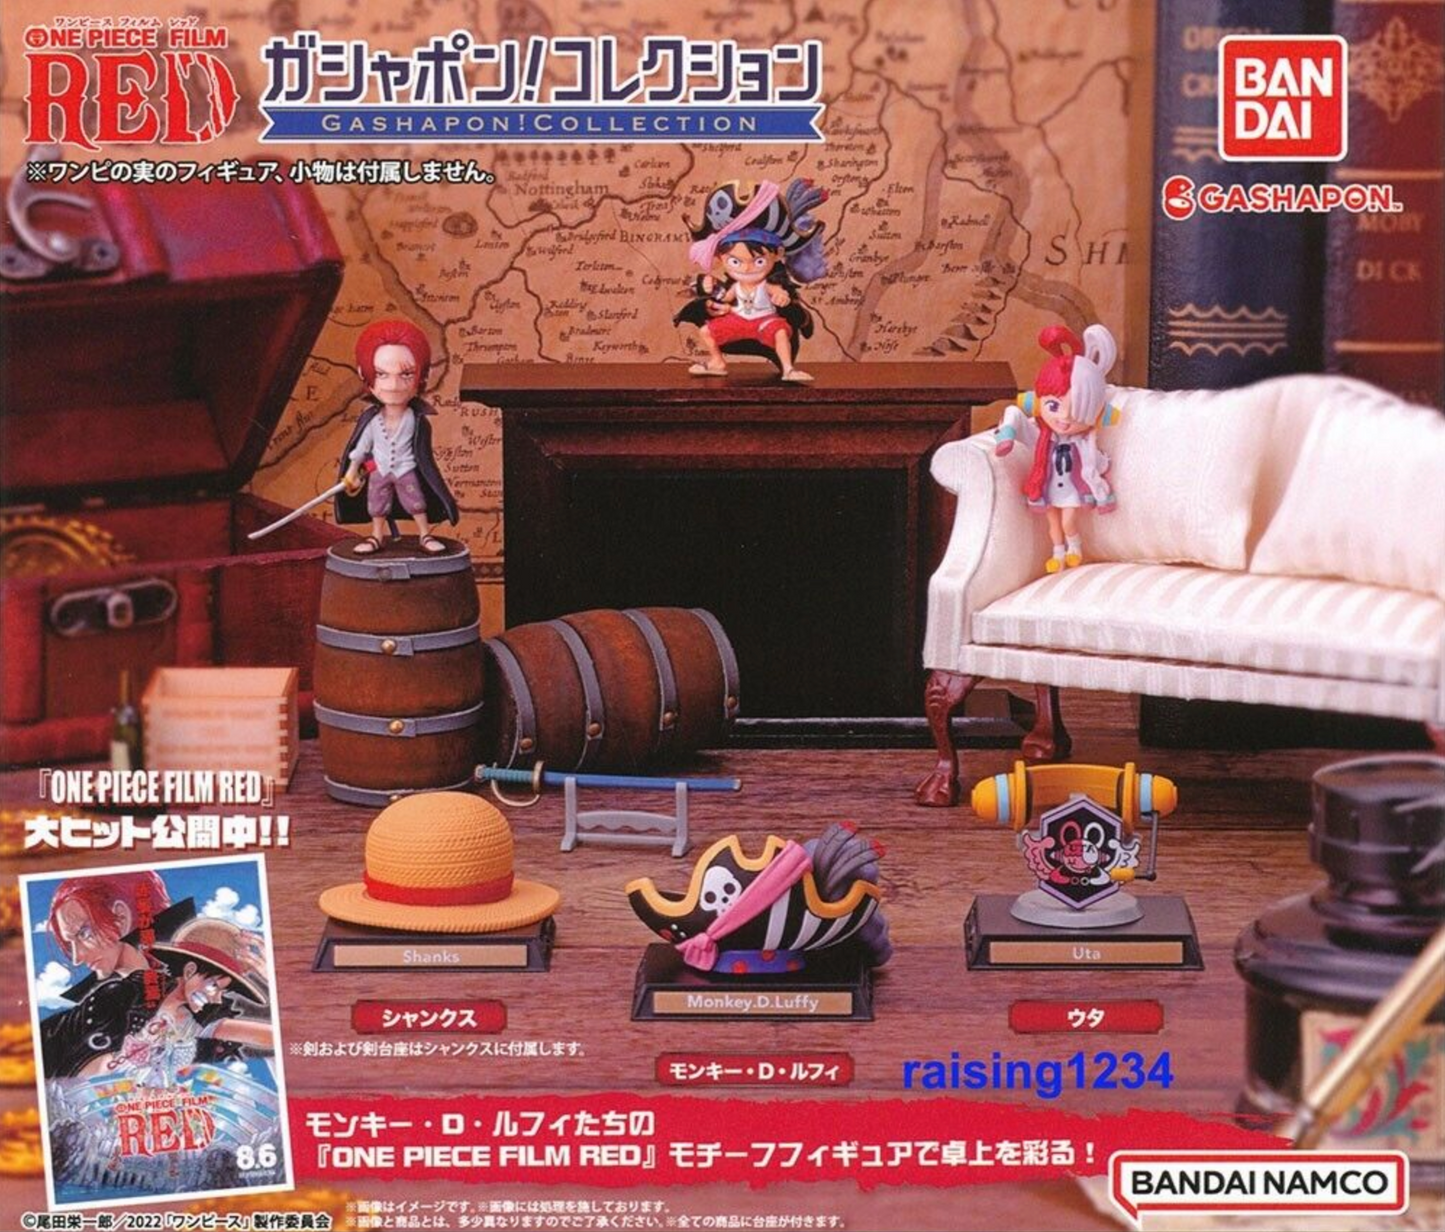 One Piece Film Red Gashapon Collection Vol.1 Gashapon